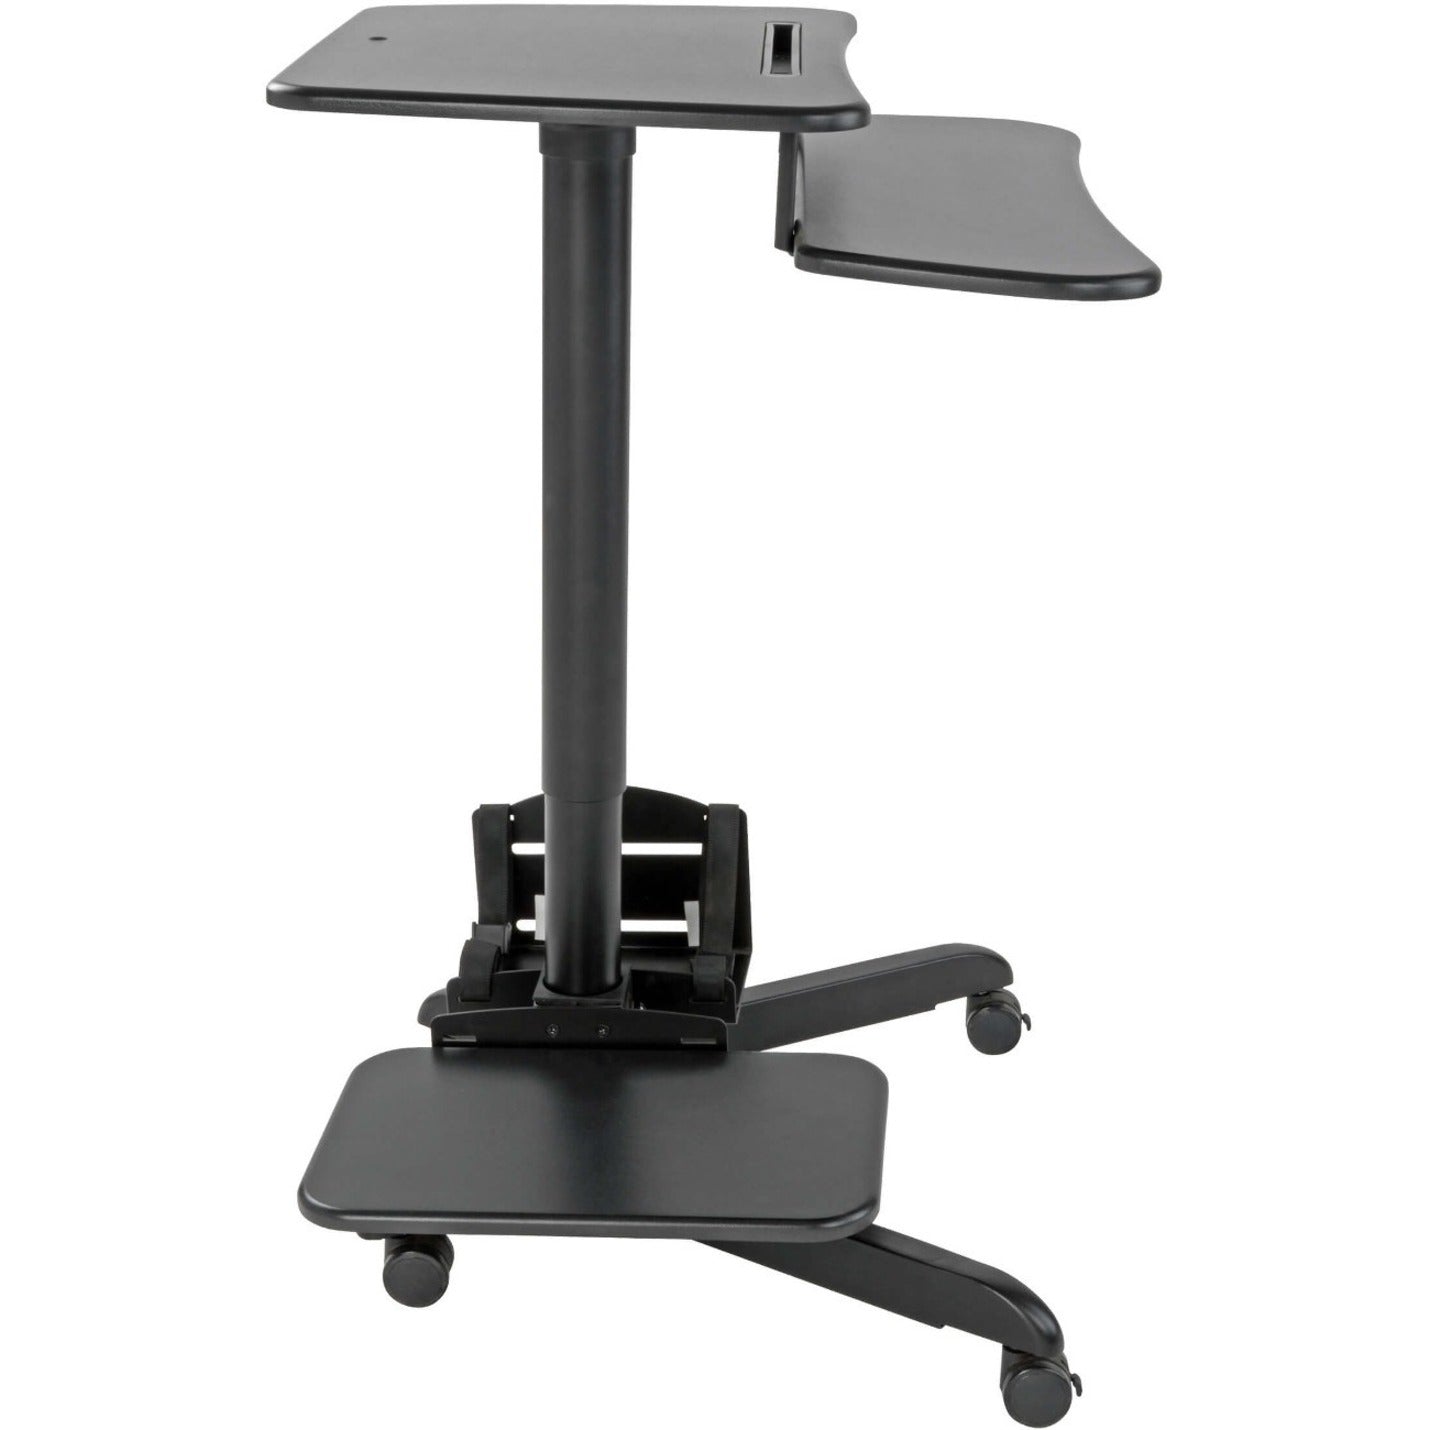 Tripp Lite WWSSRDSTC Rolling Desk TV/Monitor Cart - Height Adjustable, Locking Casters, Silver/Black